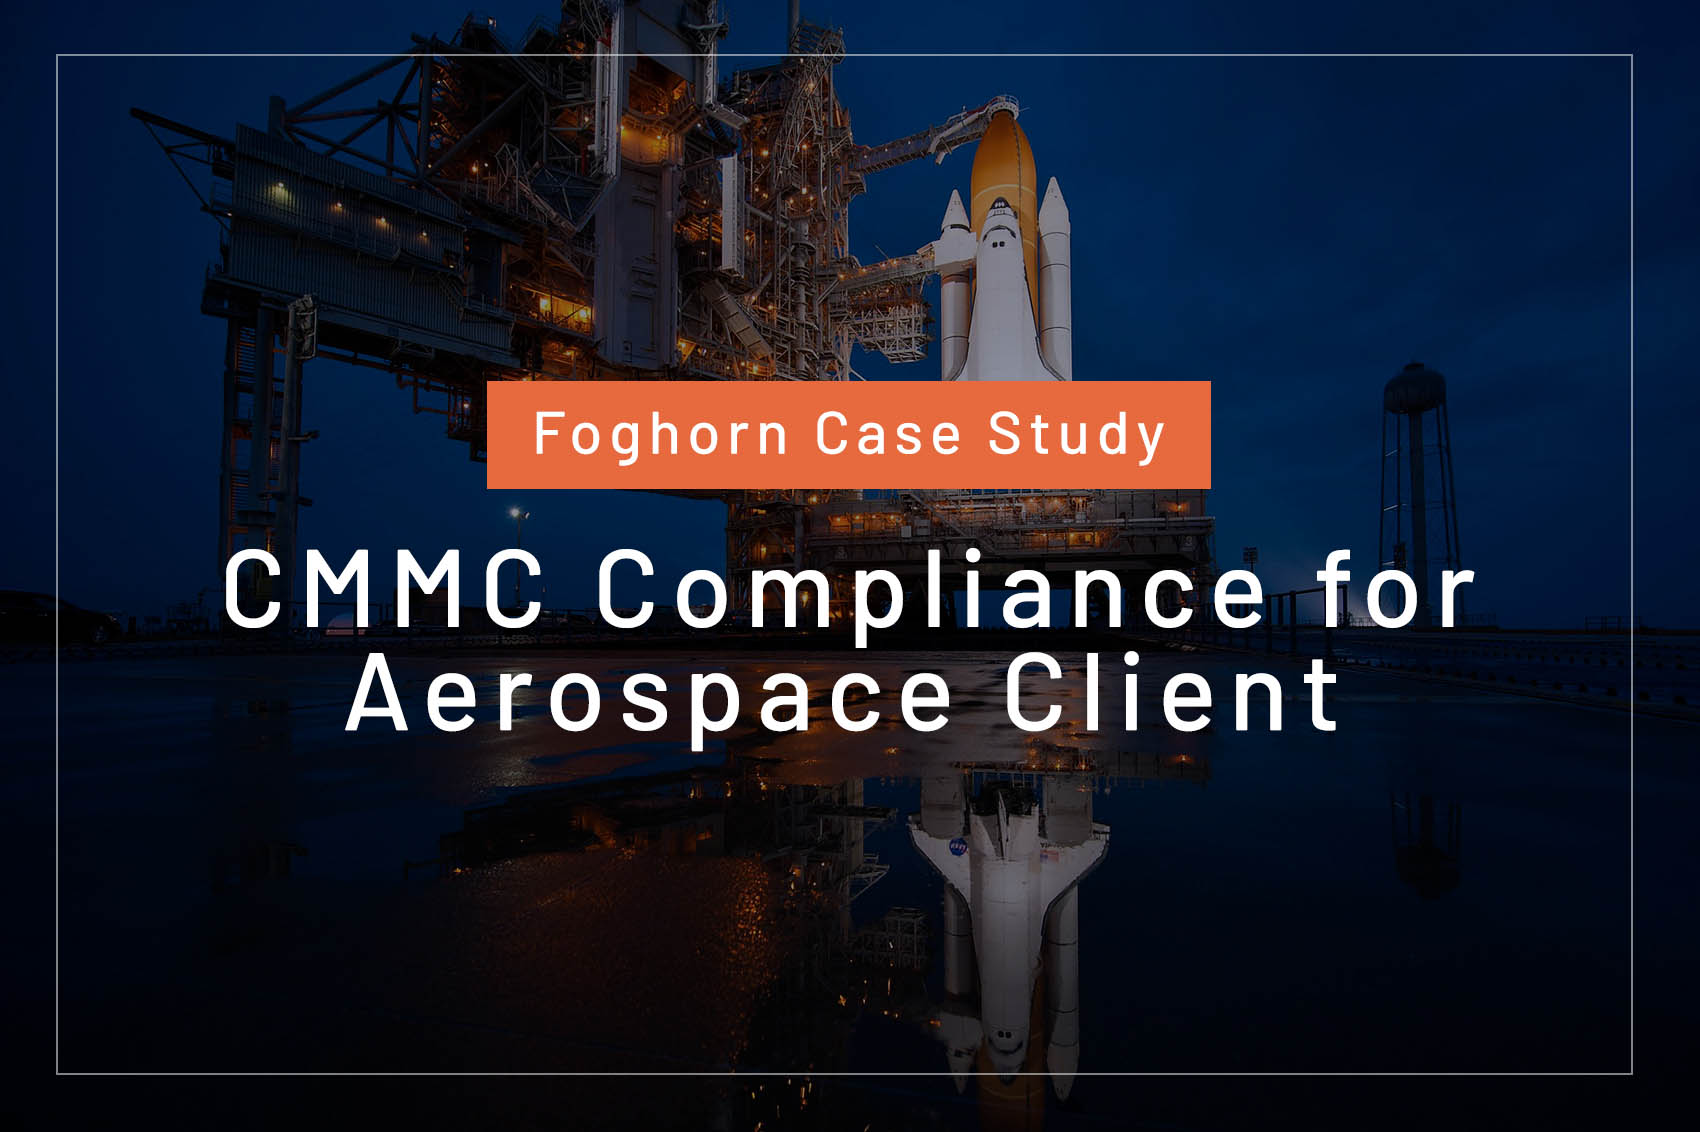 Foghorn Case Study - CMMC Compliance for Aerospace Client